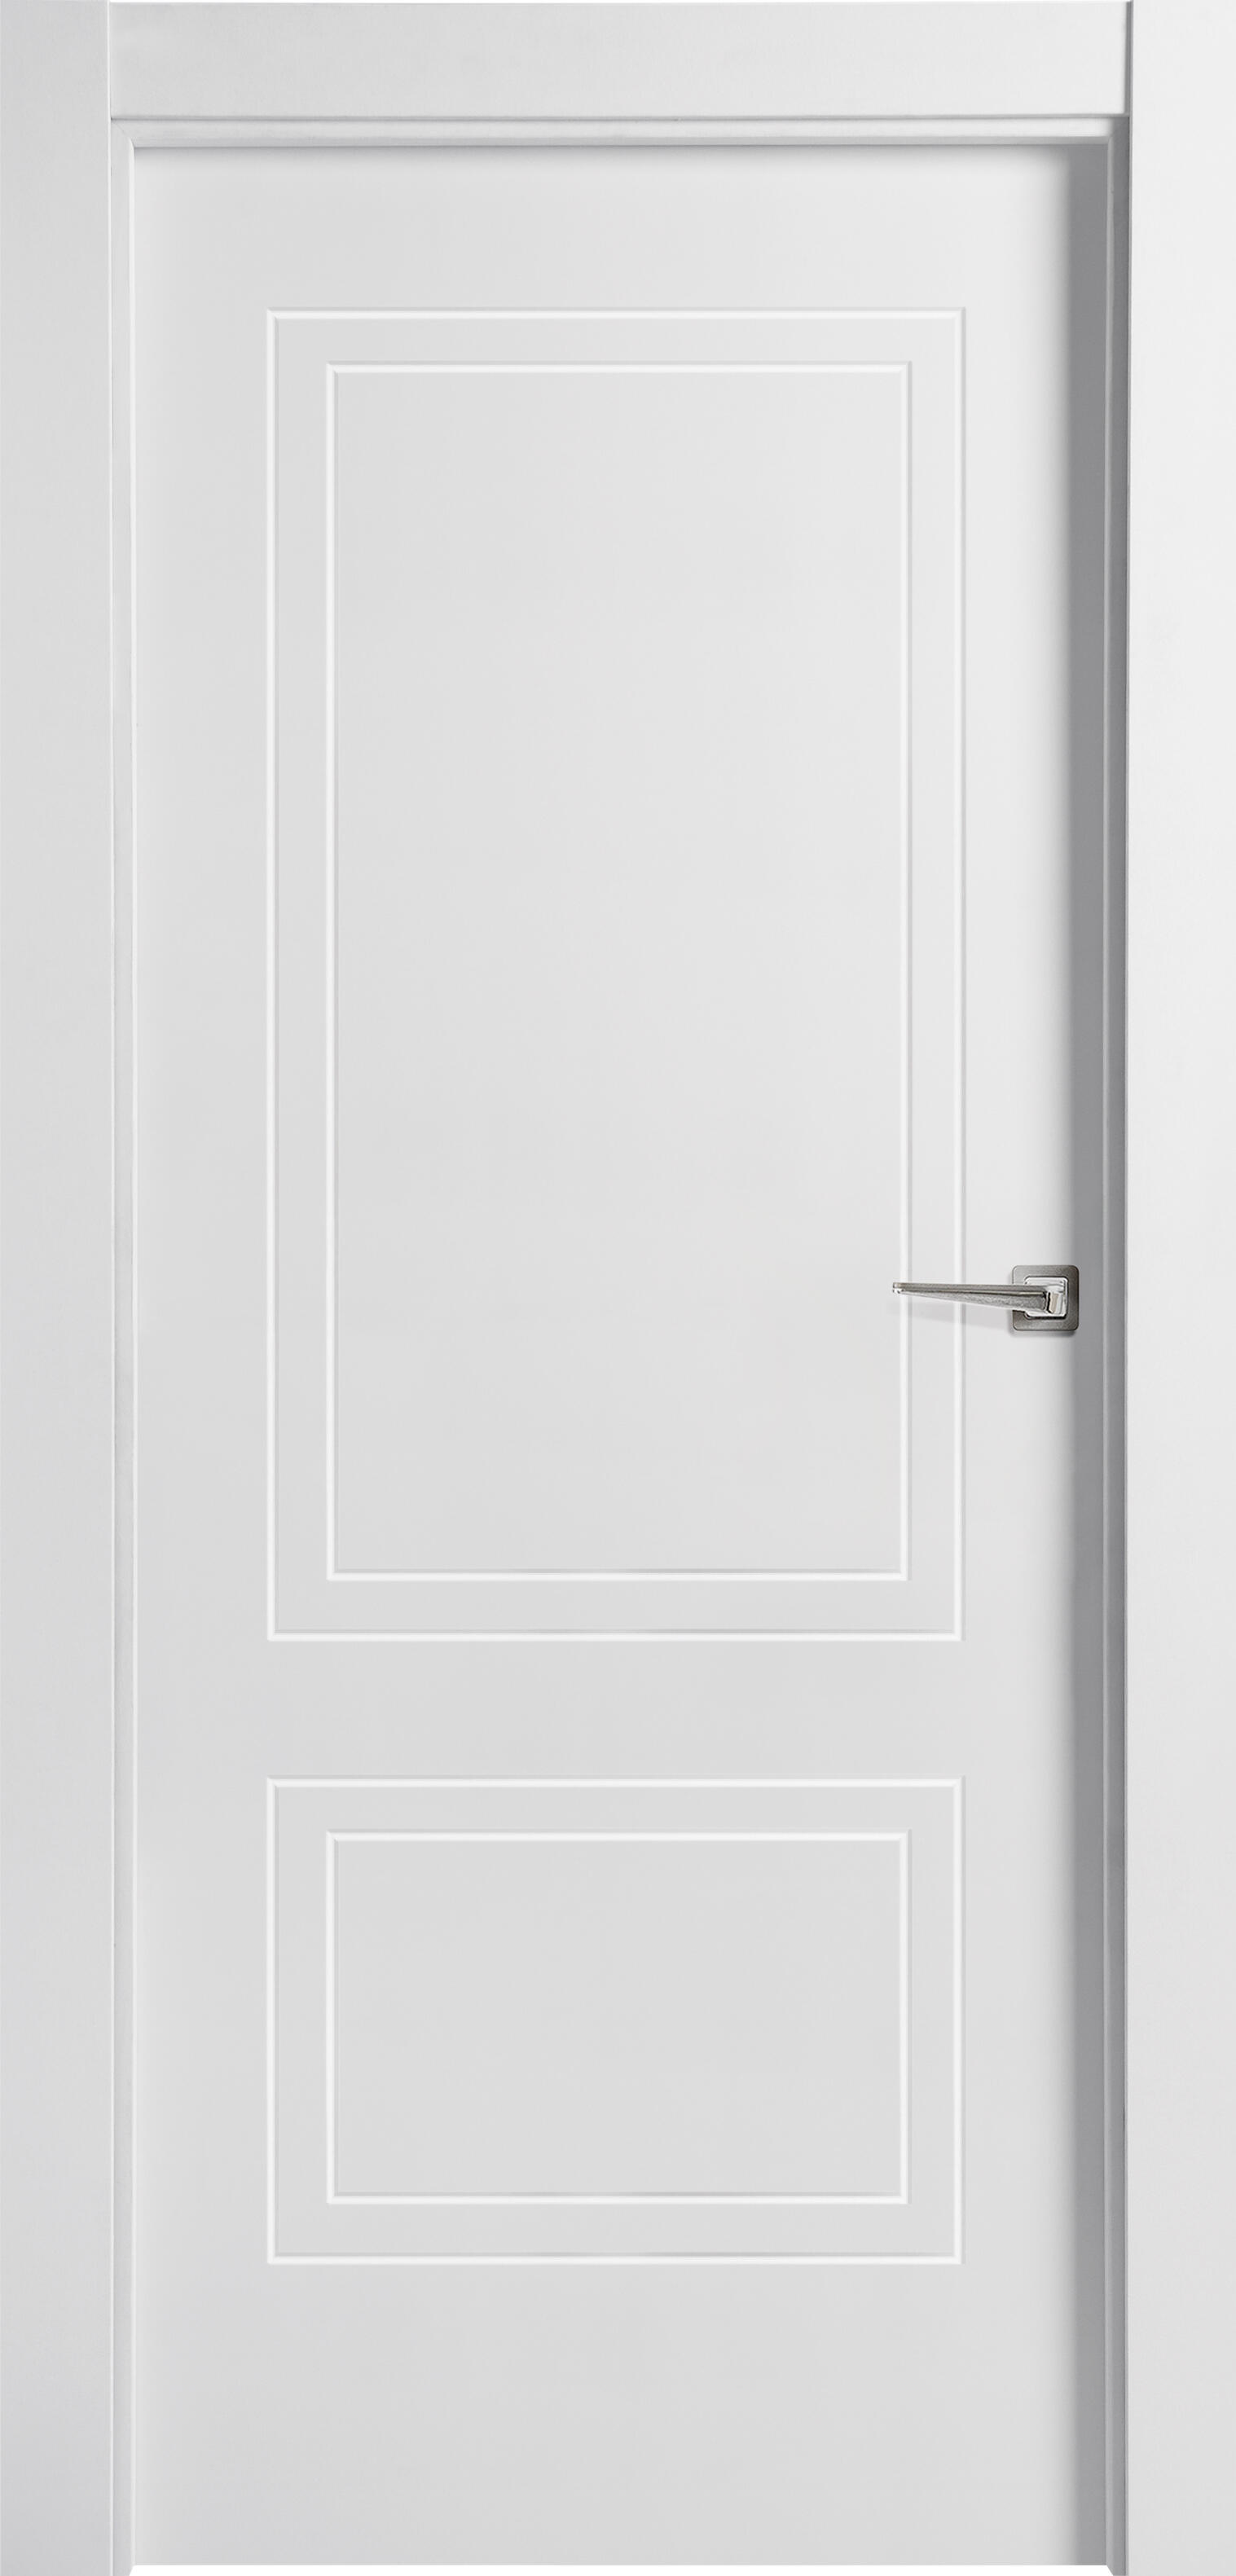 Puerta boston blanco de apertura izquierda de 9x 72.5 cm